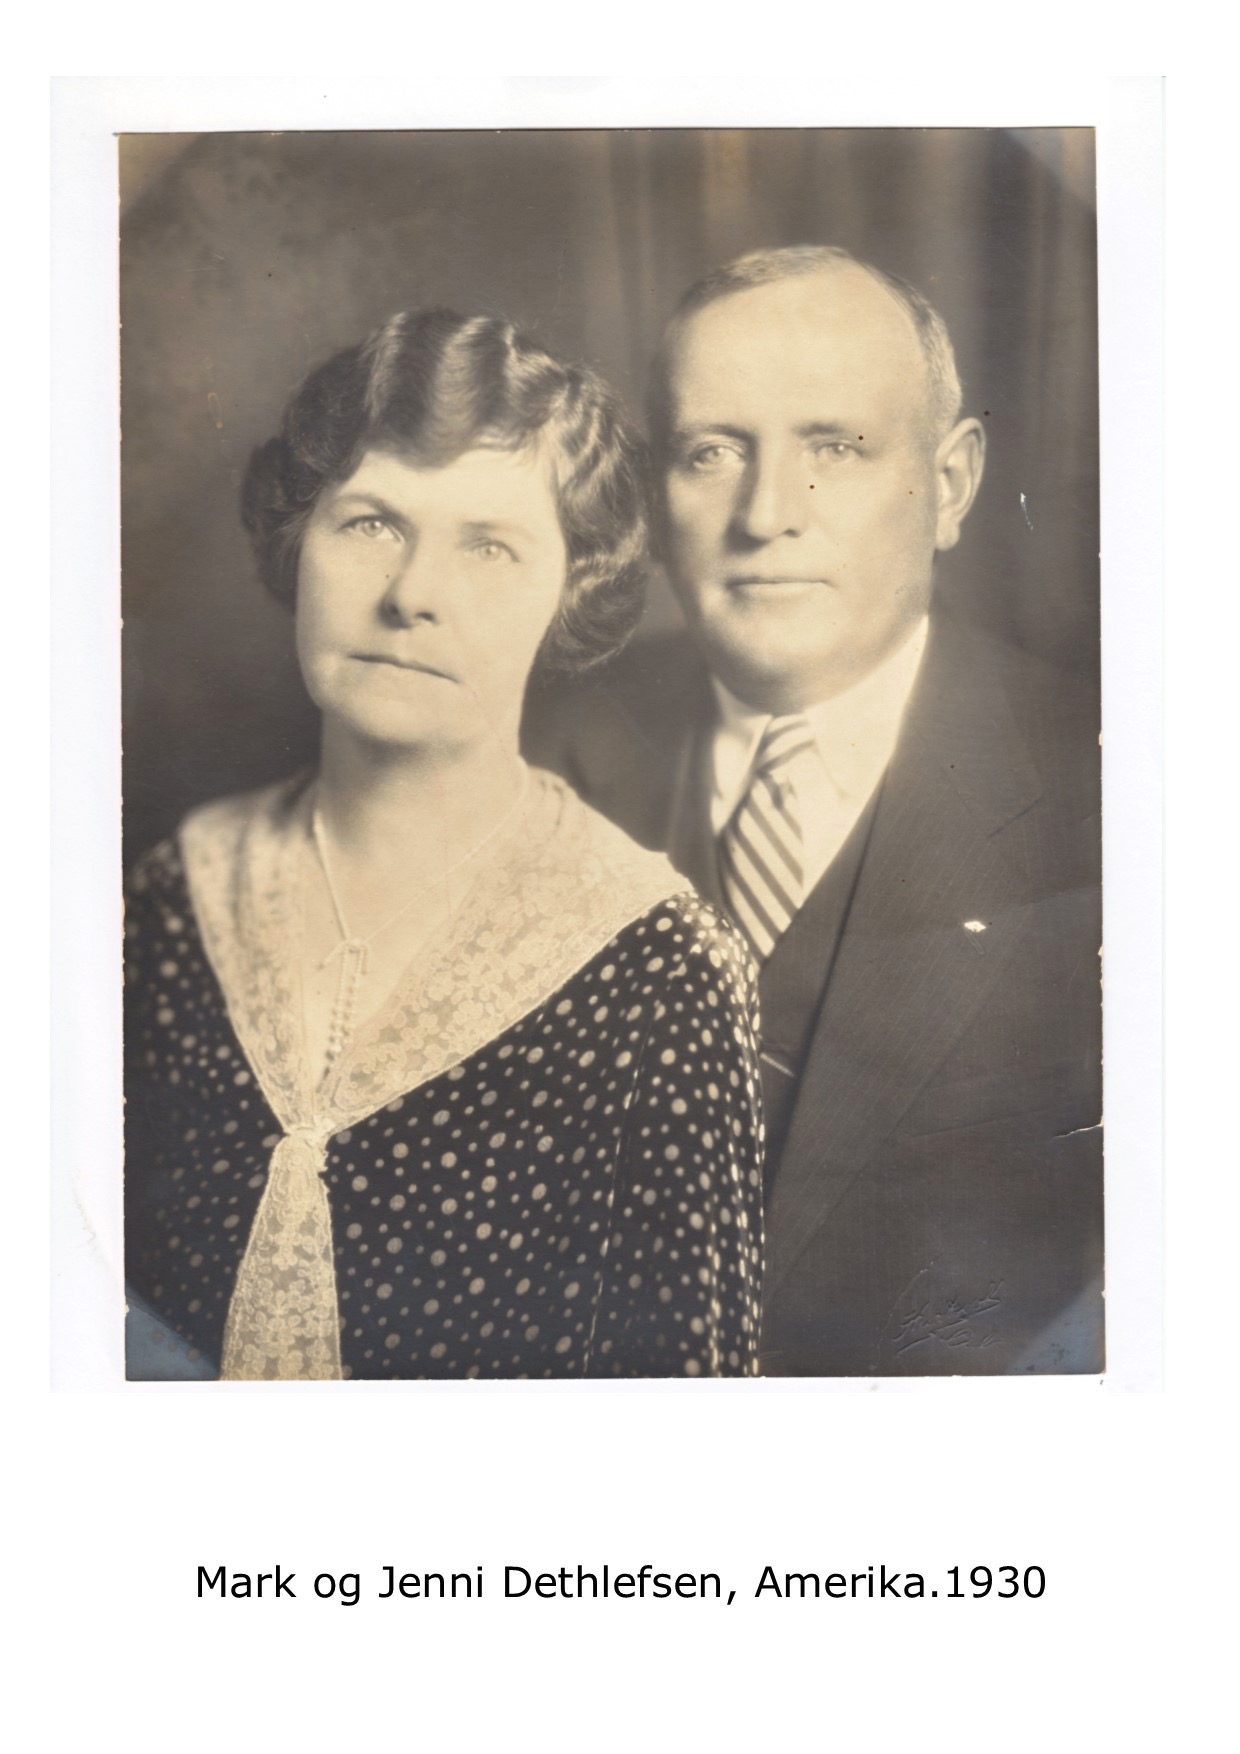 Jenni & Mark Detlefsen  -1930 